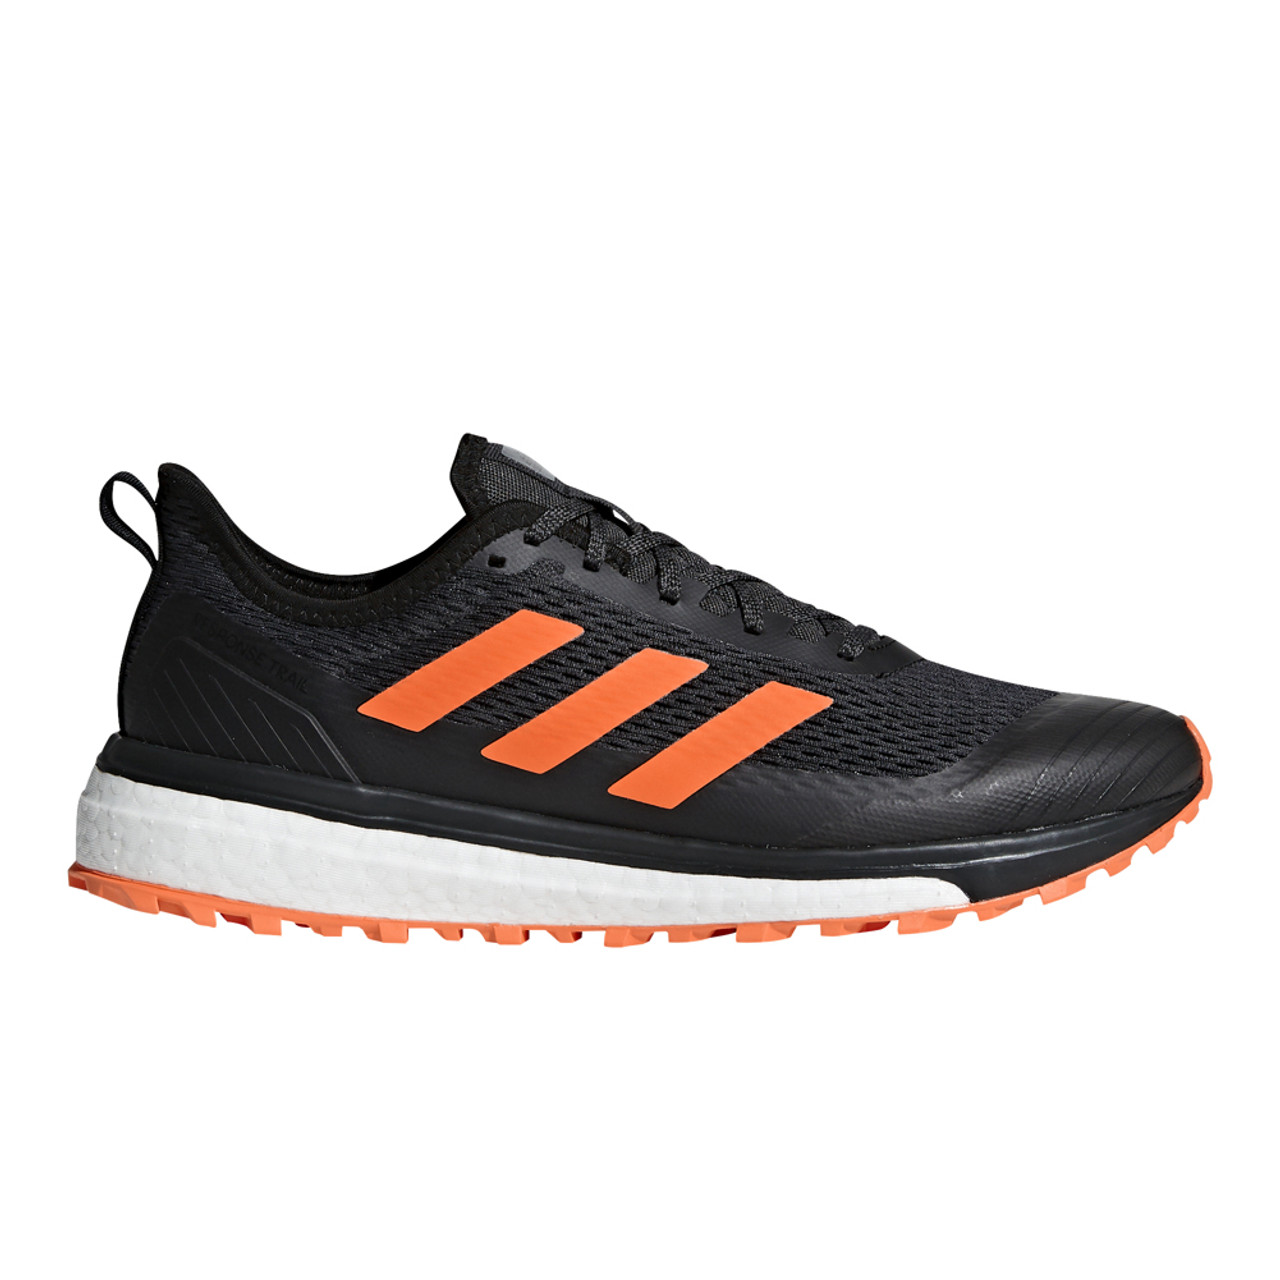 Men's Response Trail Running Shoe - Black | Discount Adidas Men's Shoes & More - Shoolu.com | Shoolu.com